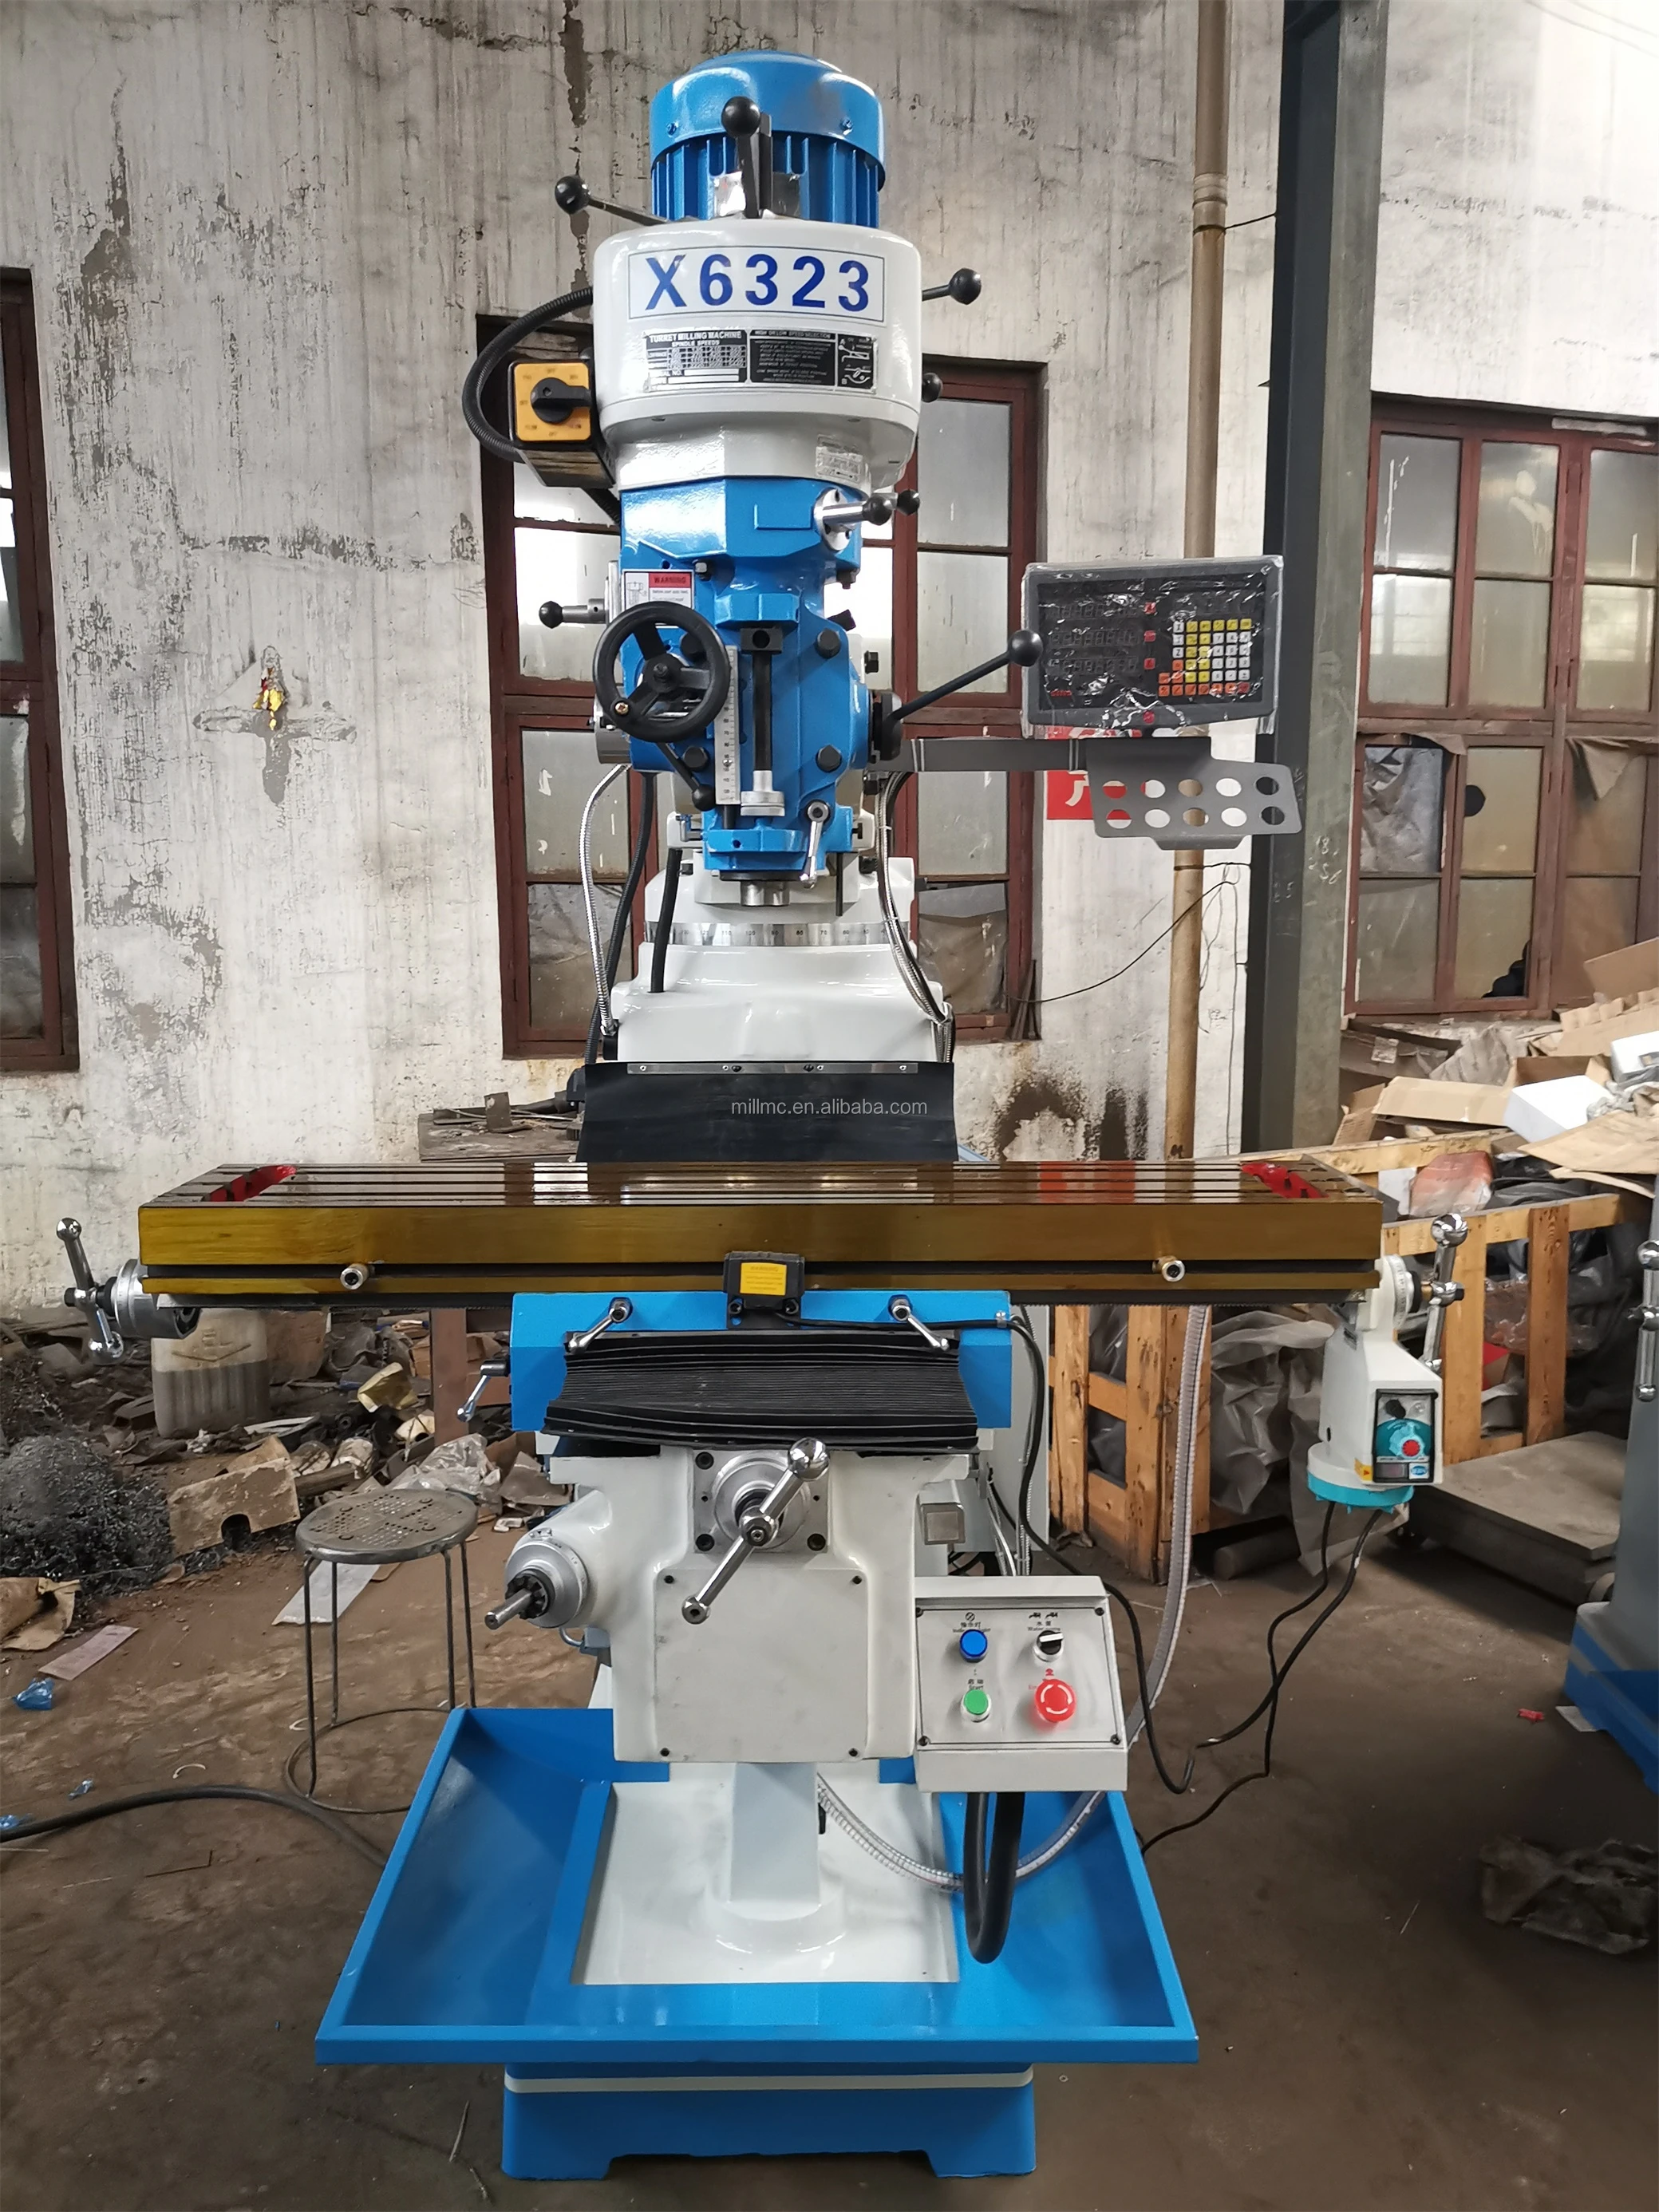 X6323 3H DRO Vertical Turret Milling Machine Universal Mill Cutting Tools